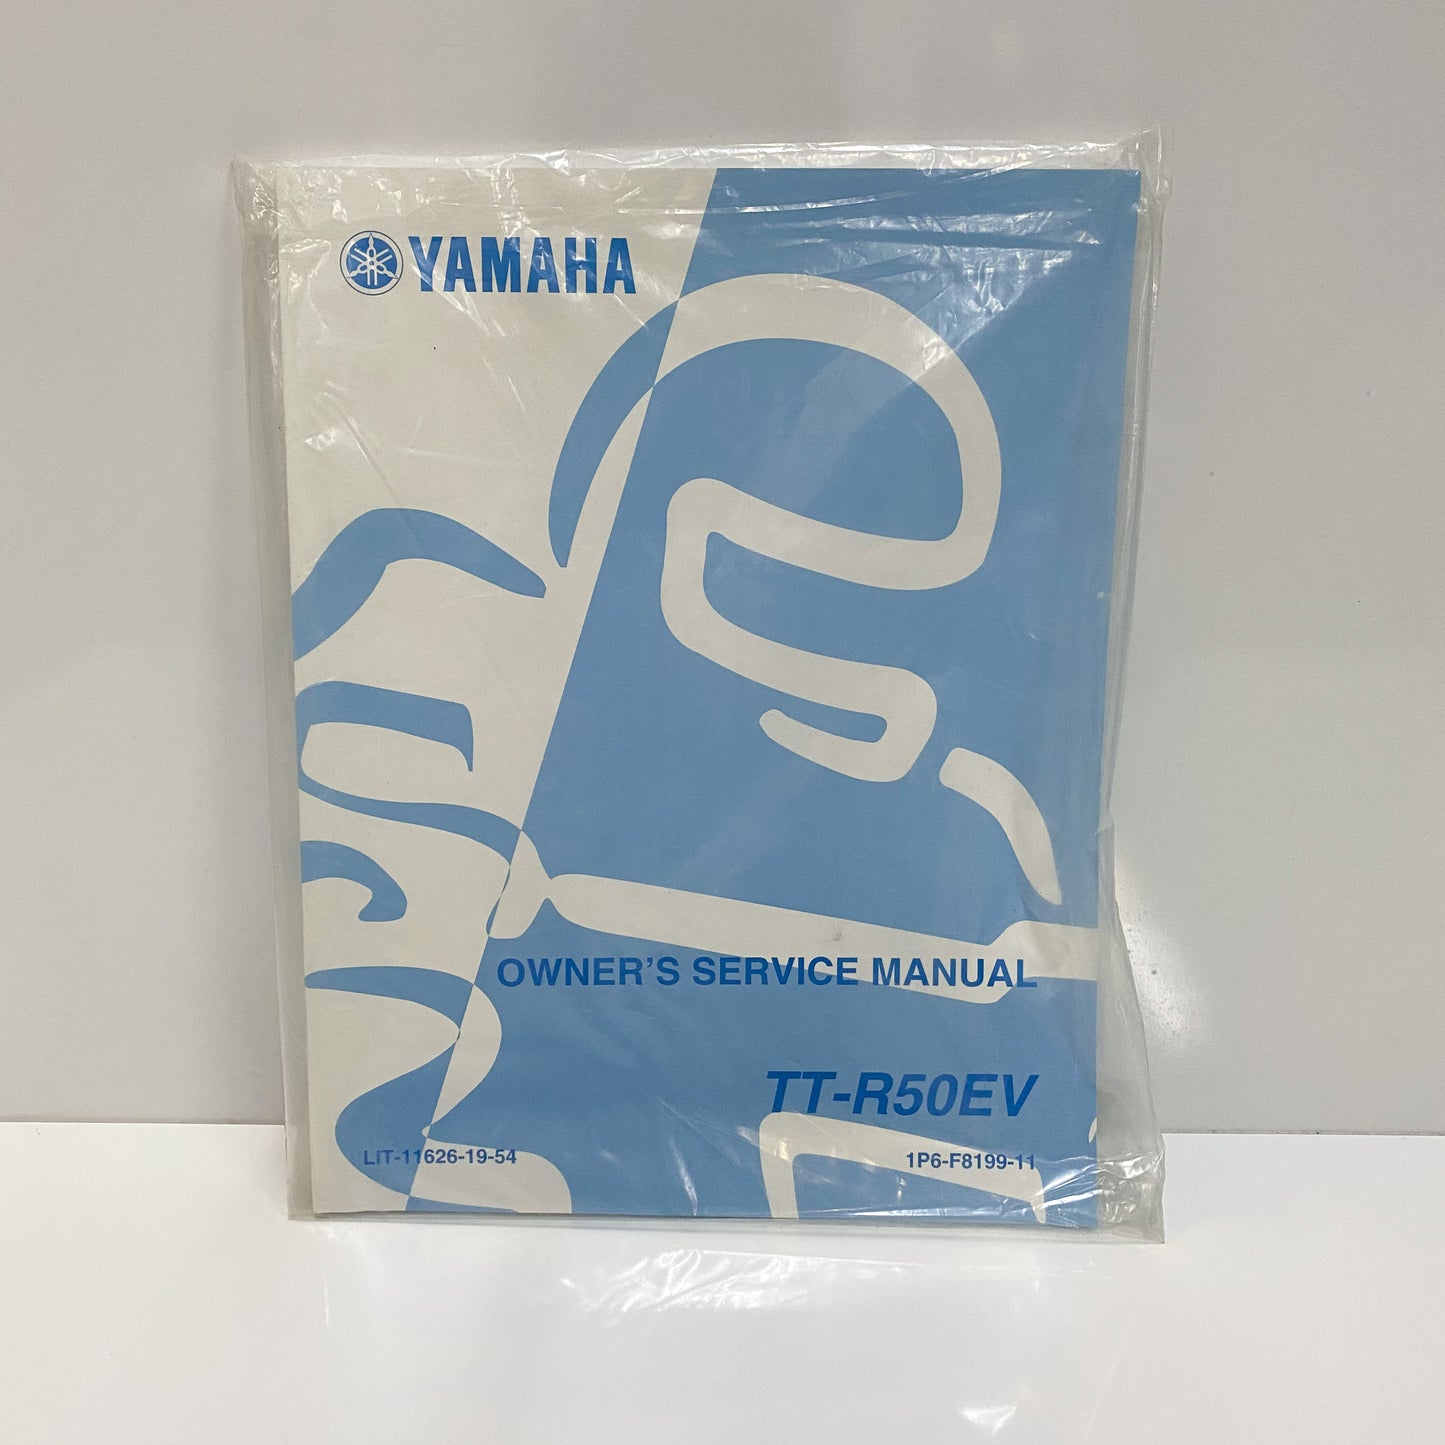 Yamaha TT-R50EV Owners Service Manual LIT-11626-19-54 NOS